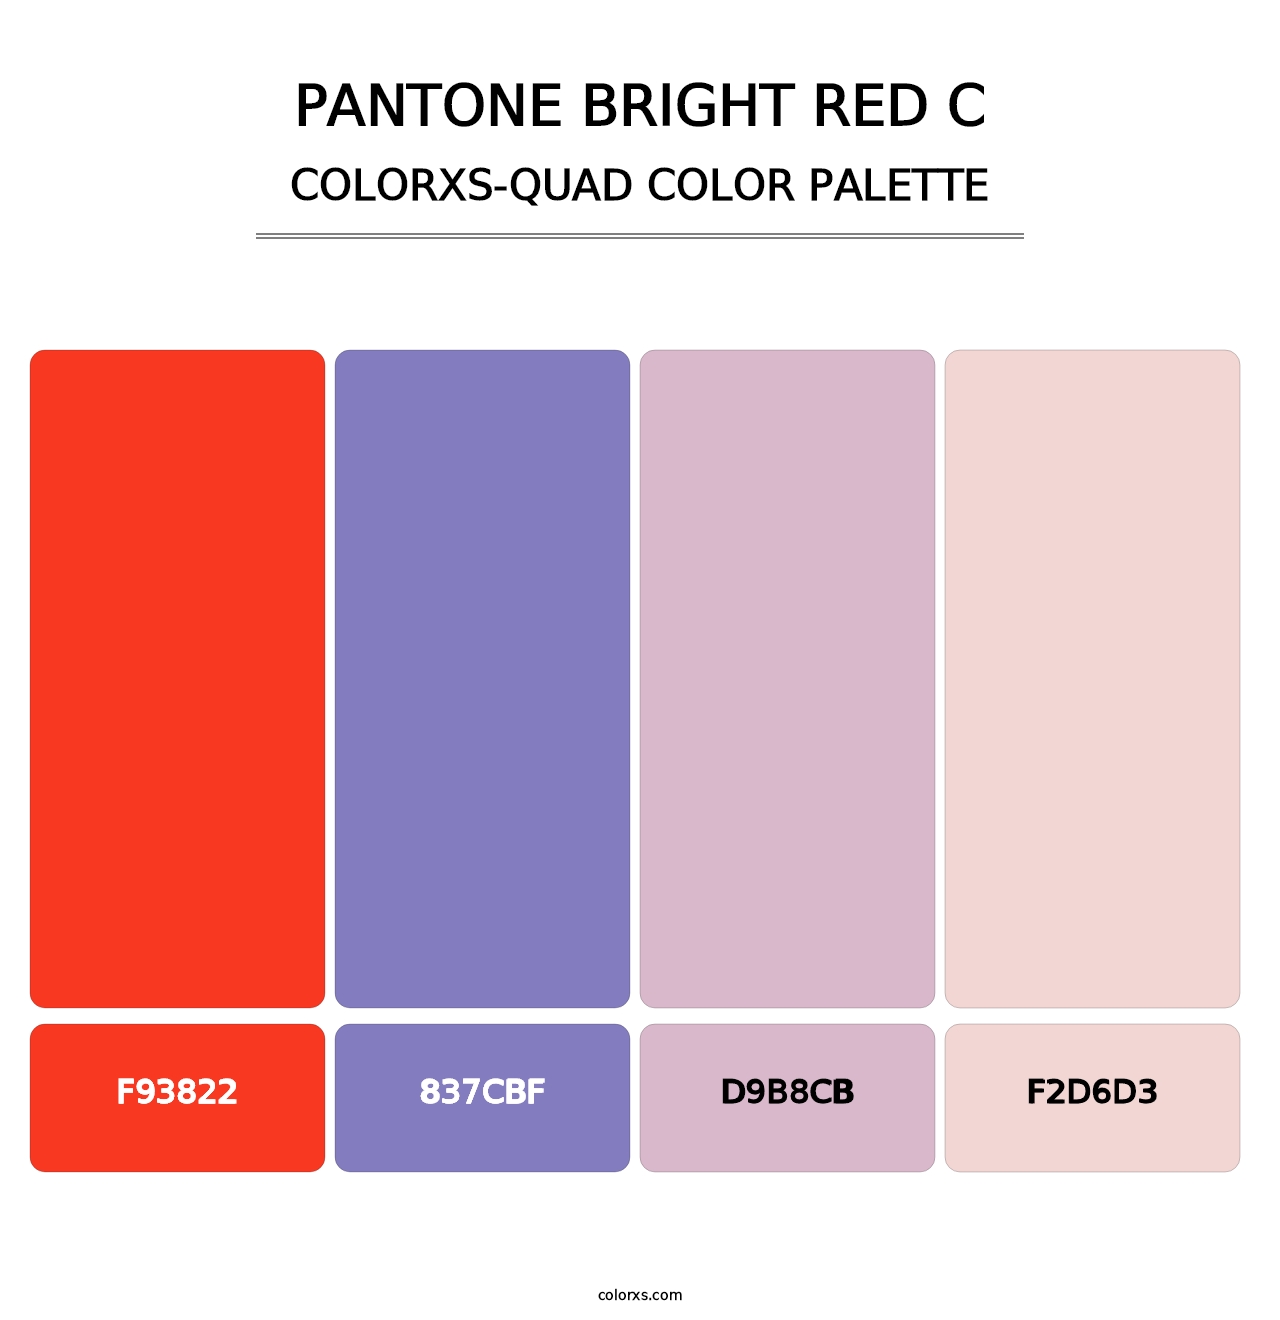 PANTONE Bright Red C - Colorxs Quad Palette